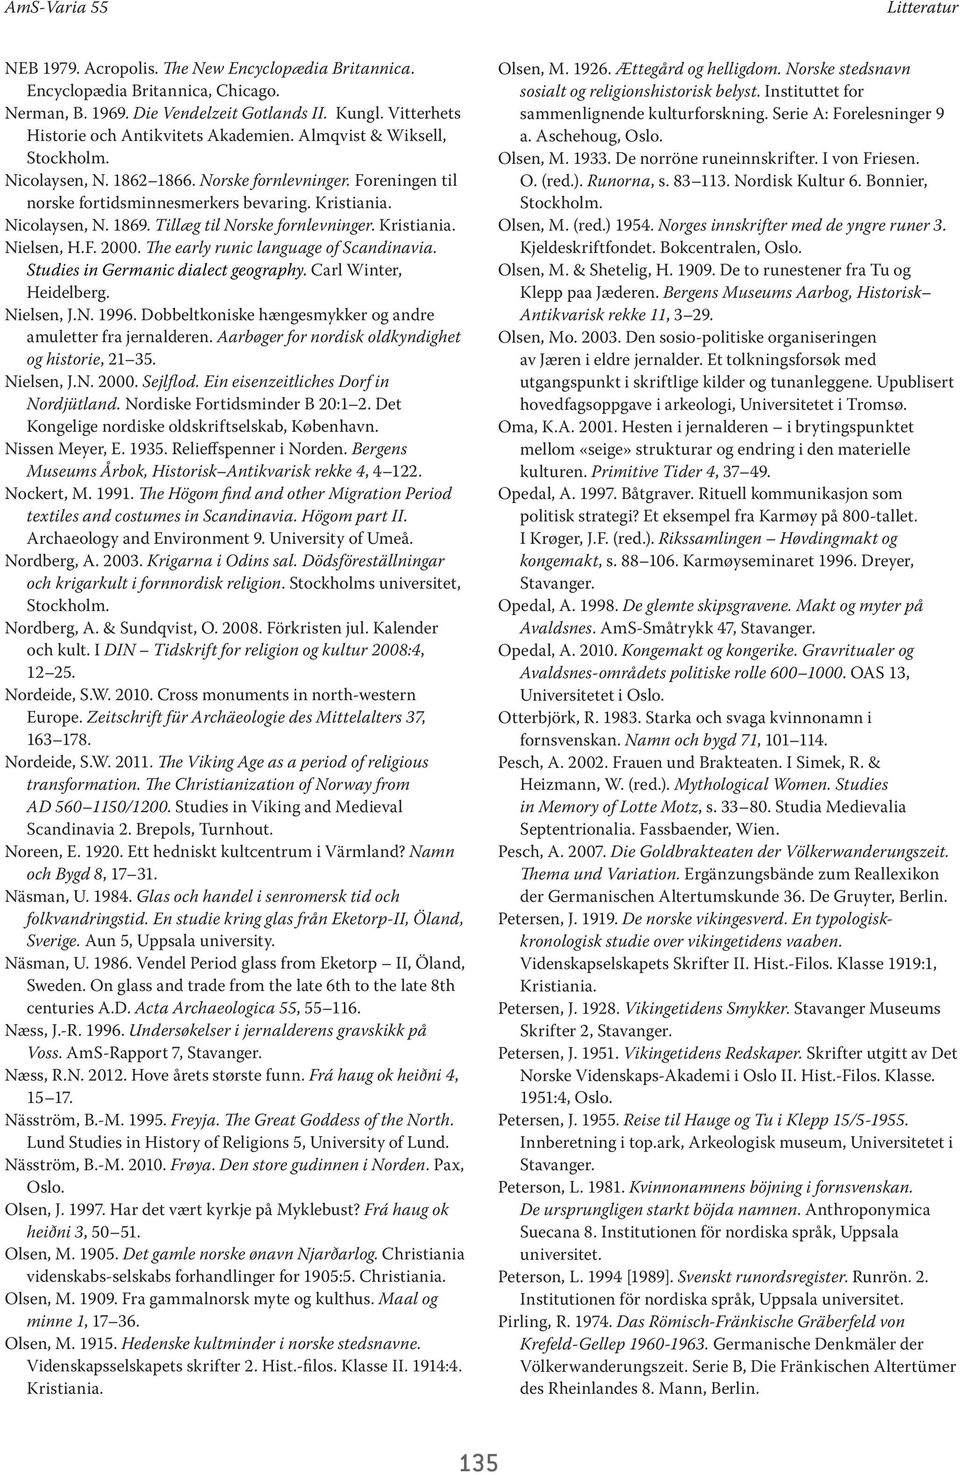 Nicolaysen, N. 1869. Tillæg til Norske fornlevninger. Kristiania. Nielsen, H.F. 2000. The early runic language of Scandinavia. Studies in Germanic dialect geography. Carl Winter, Heidelberg.